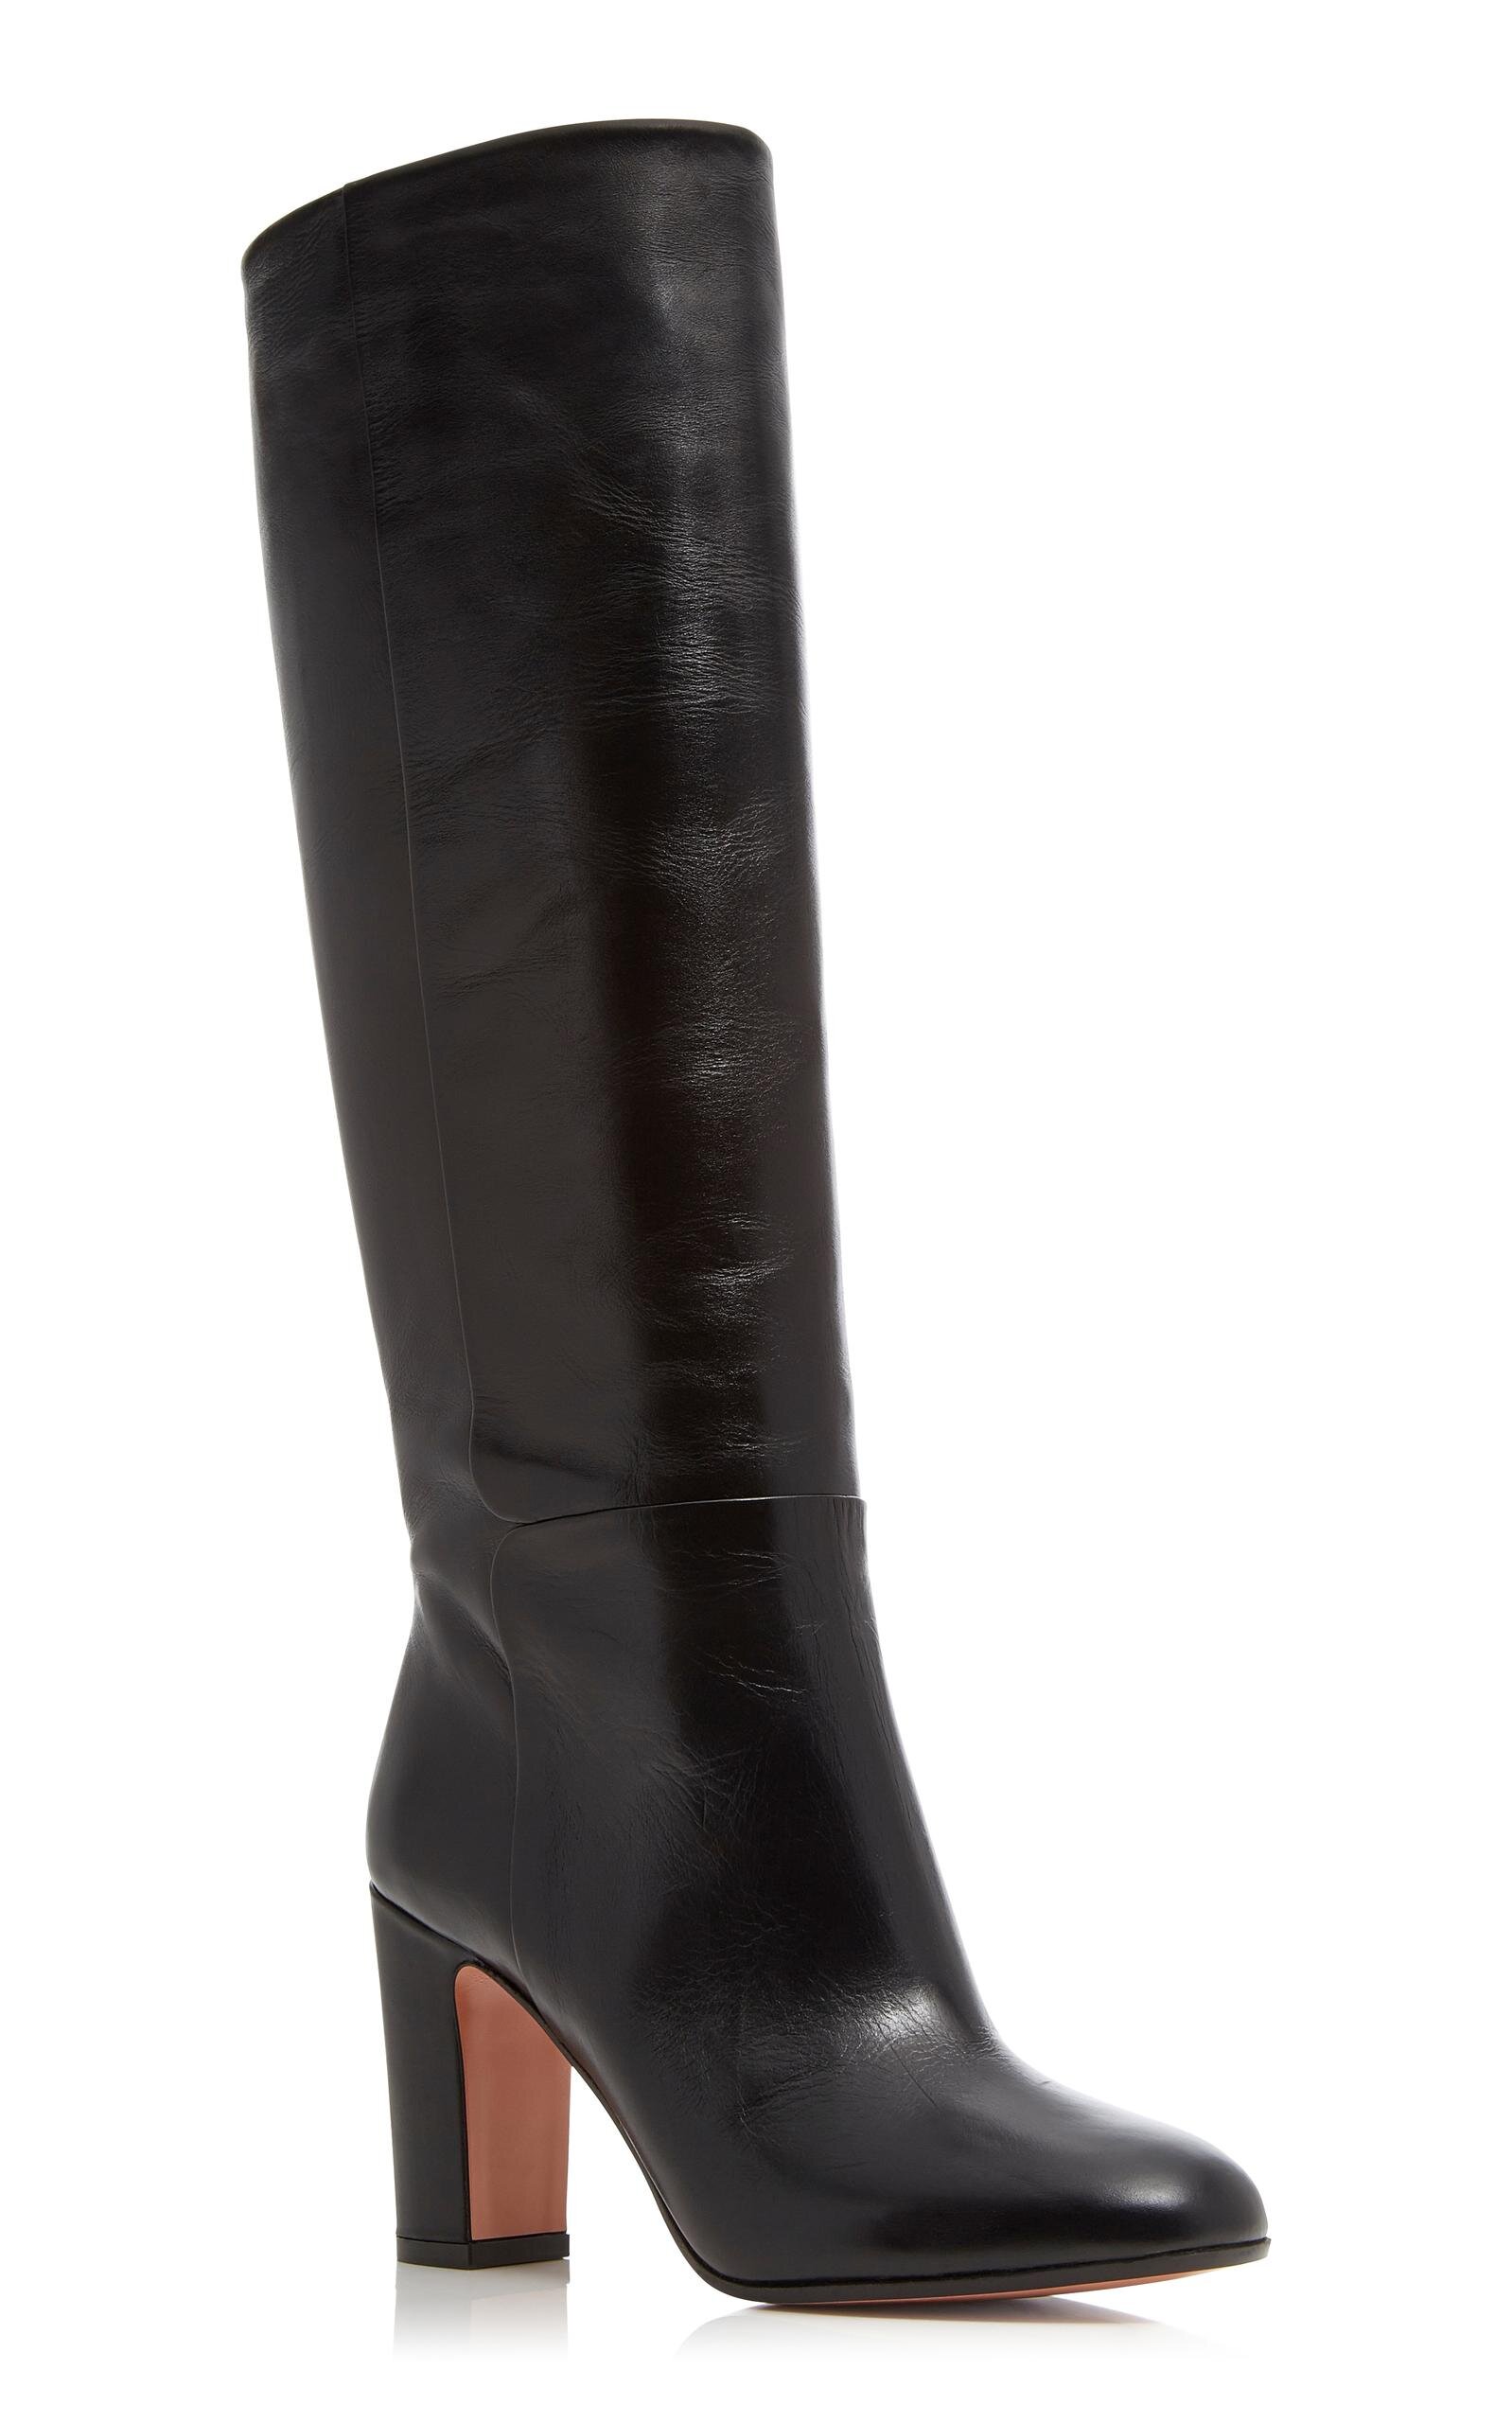 Aquazzura Brera Knee-High Boots in Black Leather.jpg